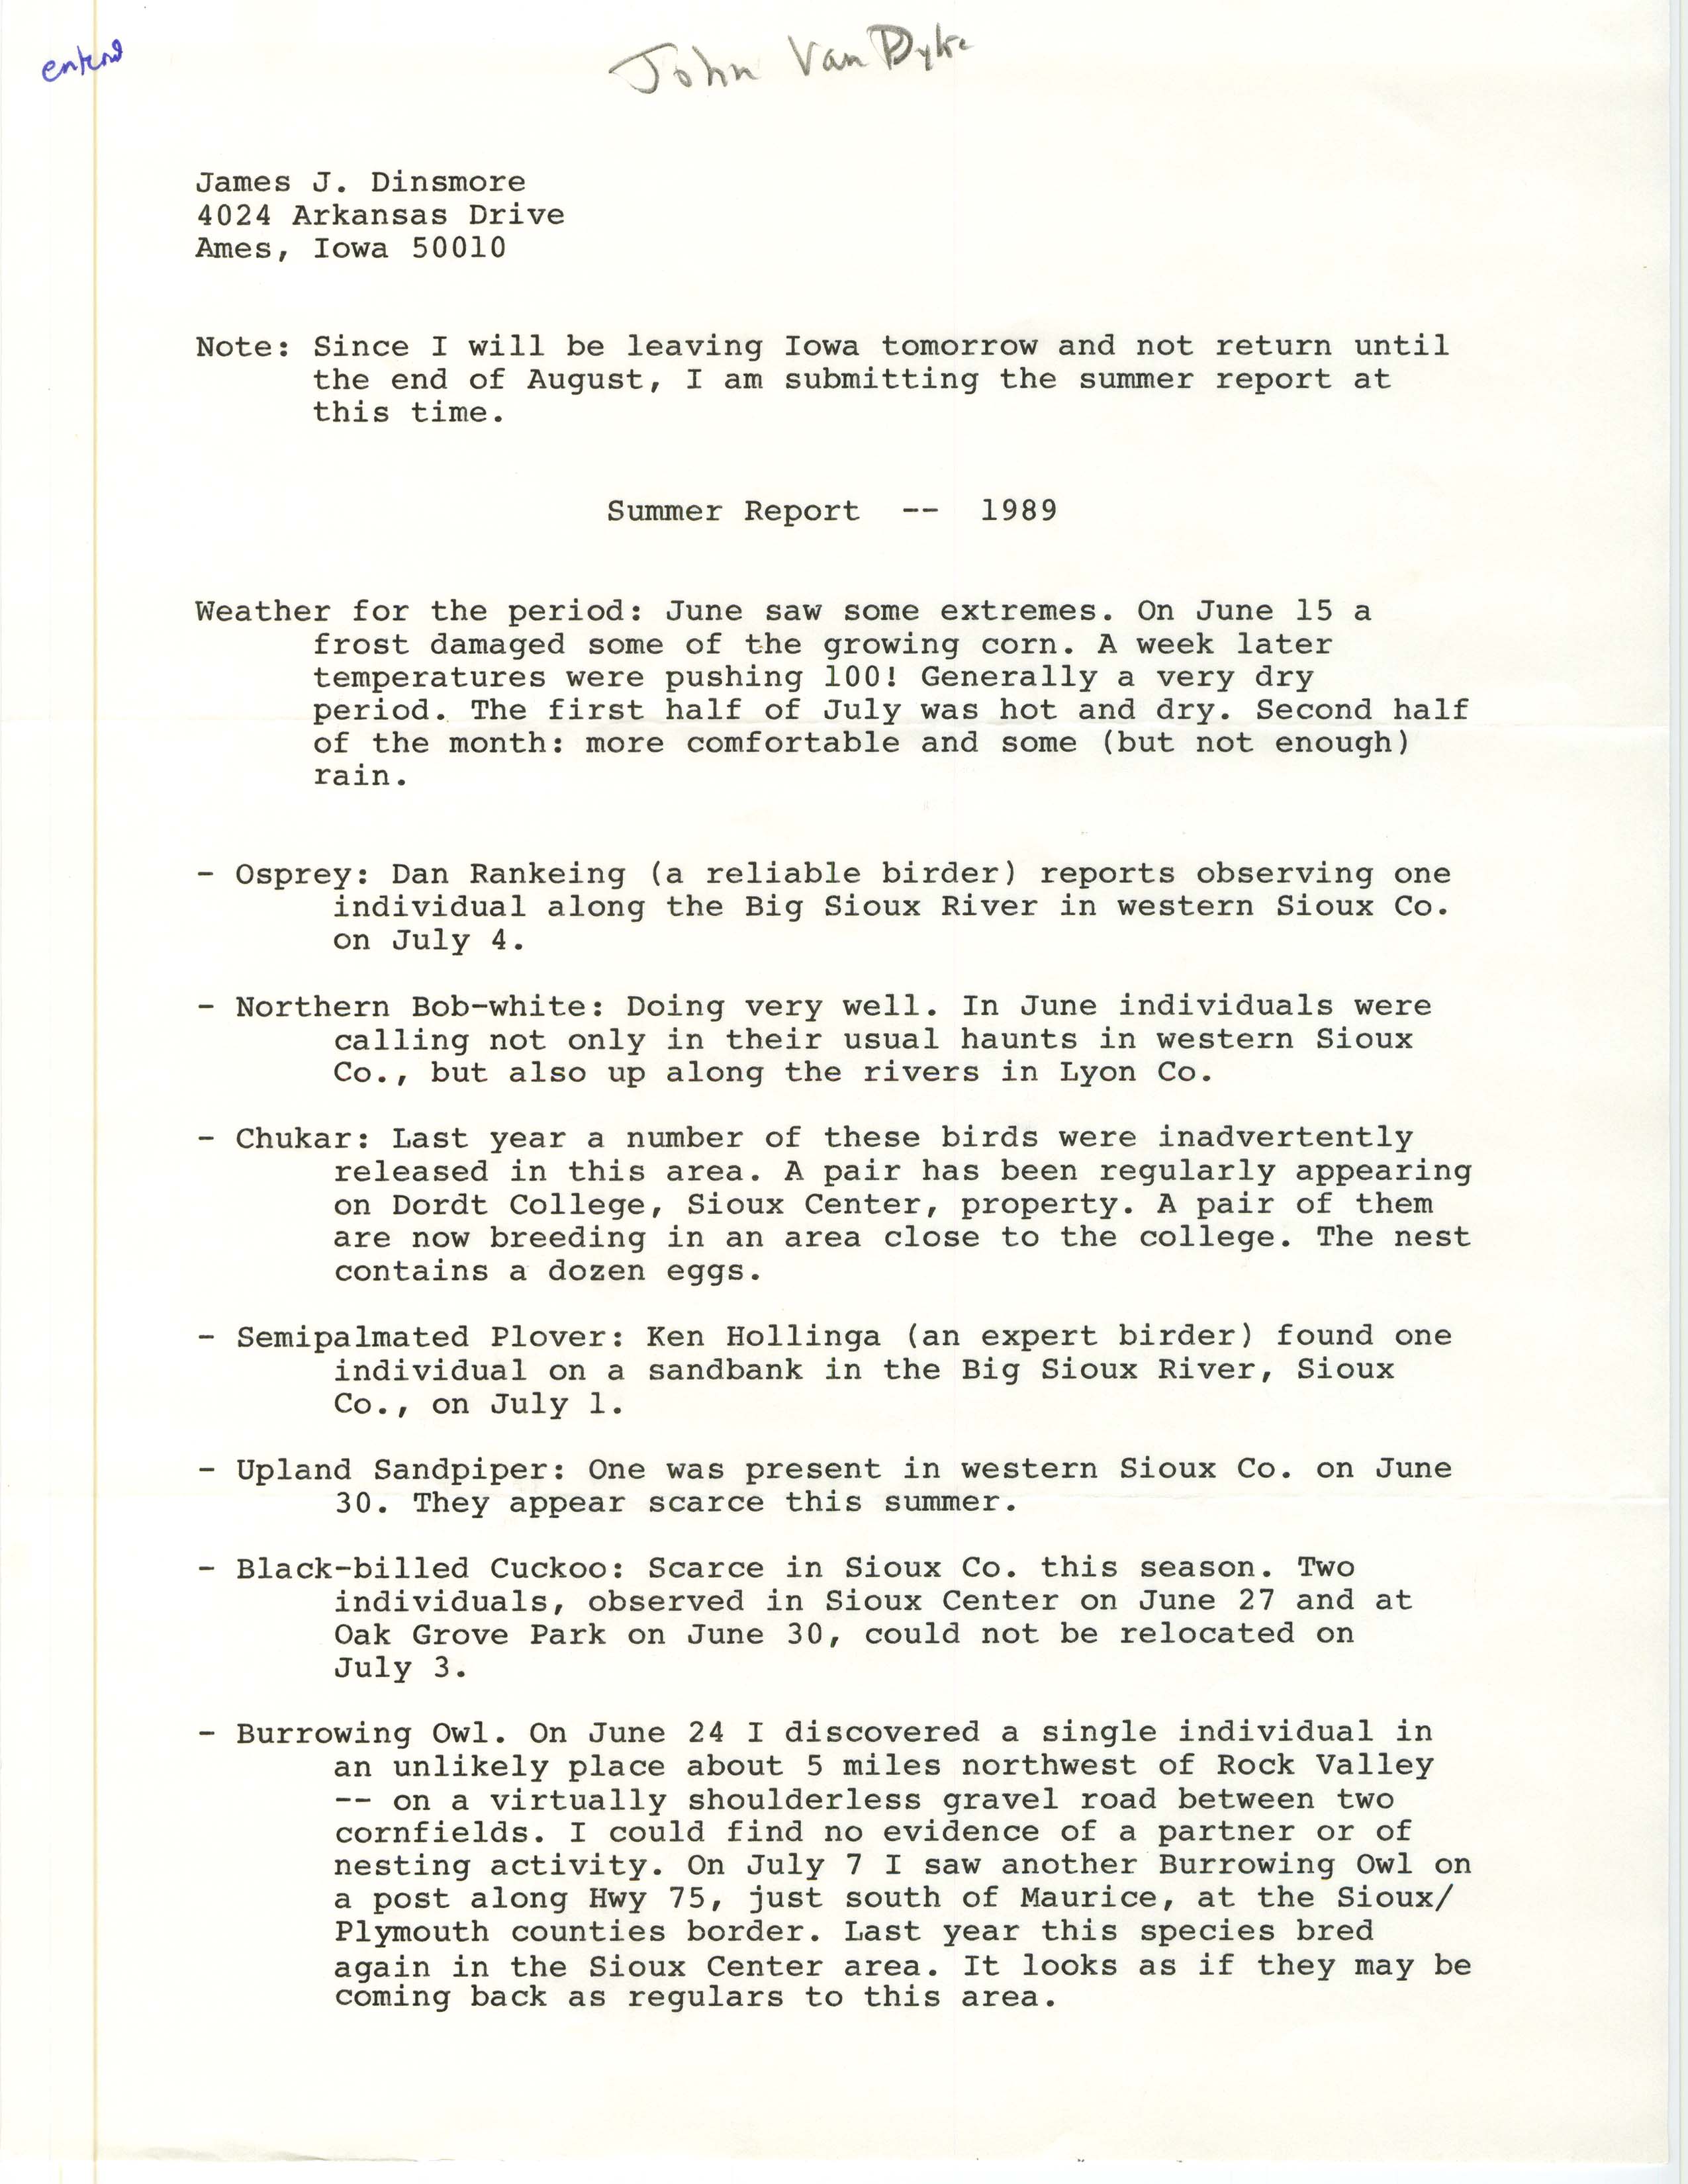 John Van Dyk letter to James J. Dinsmore regarding summer bird sightings, summer 1989